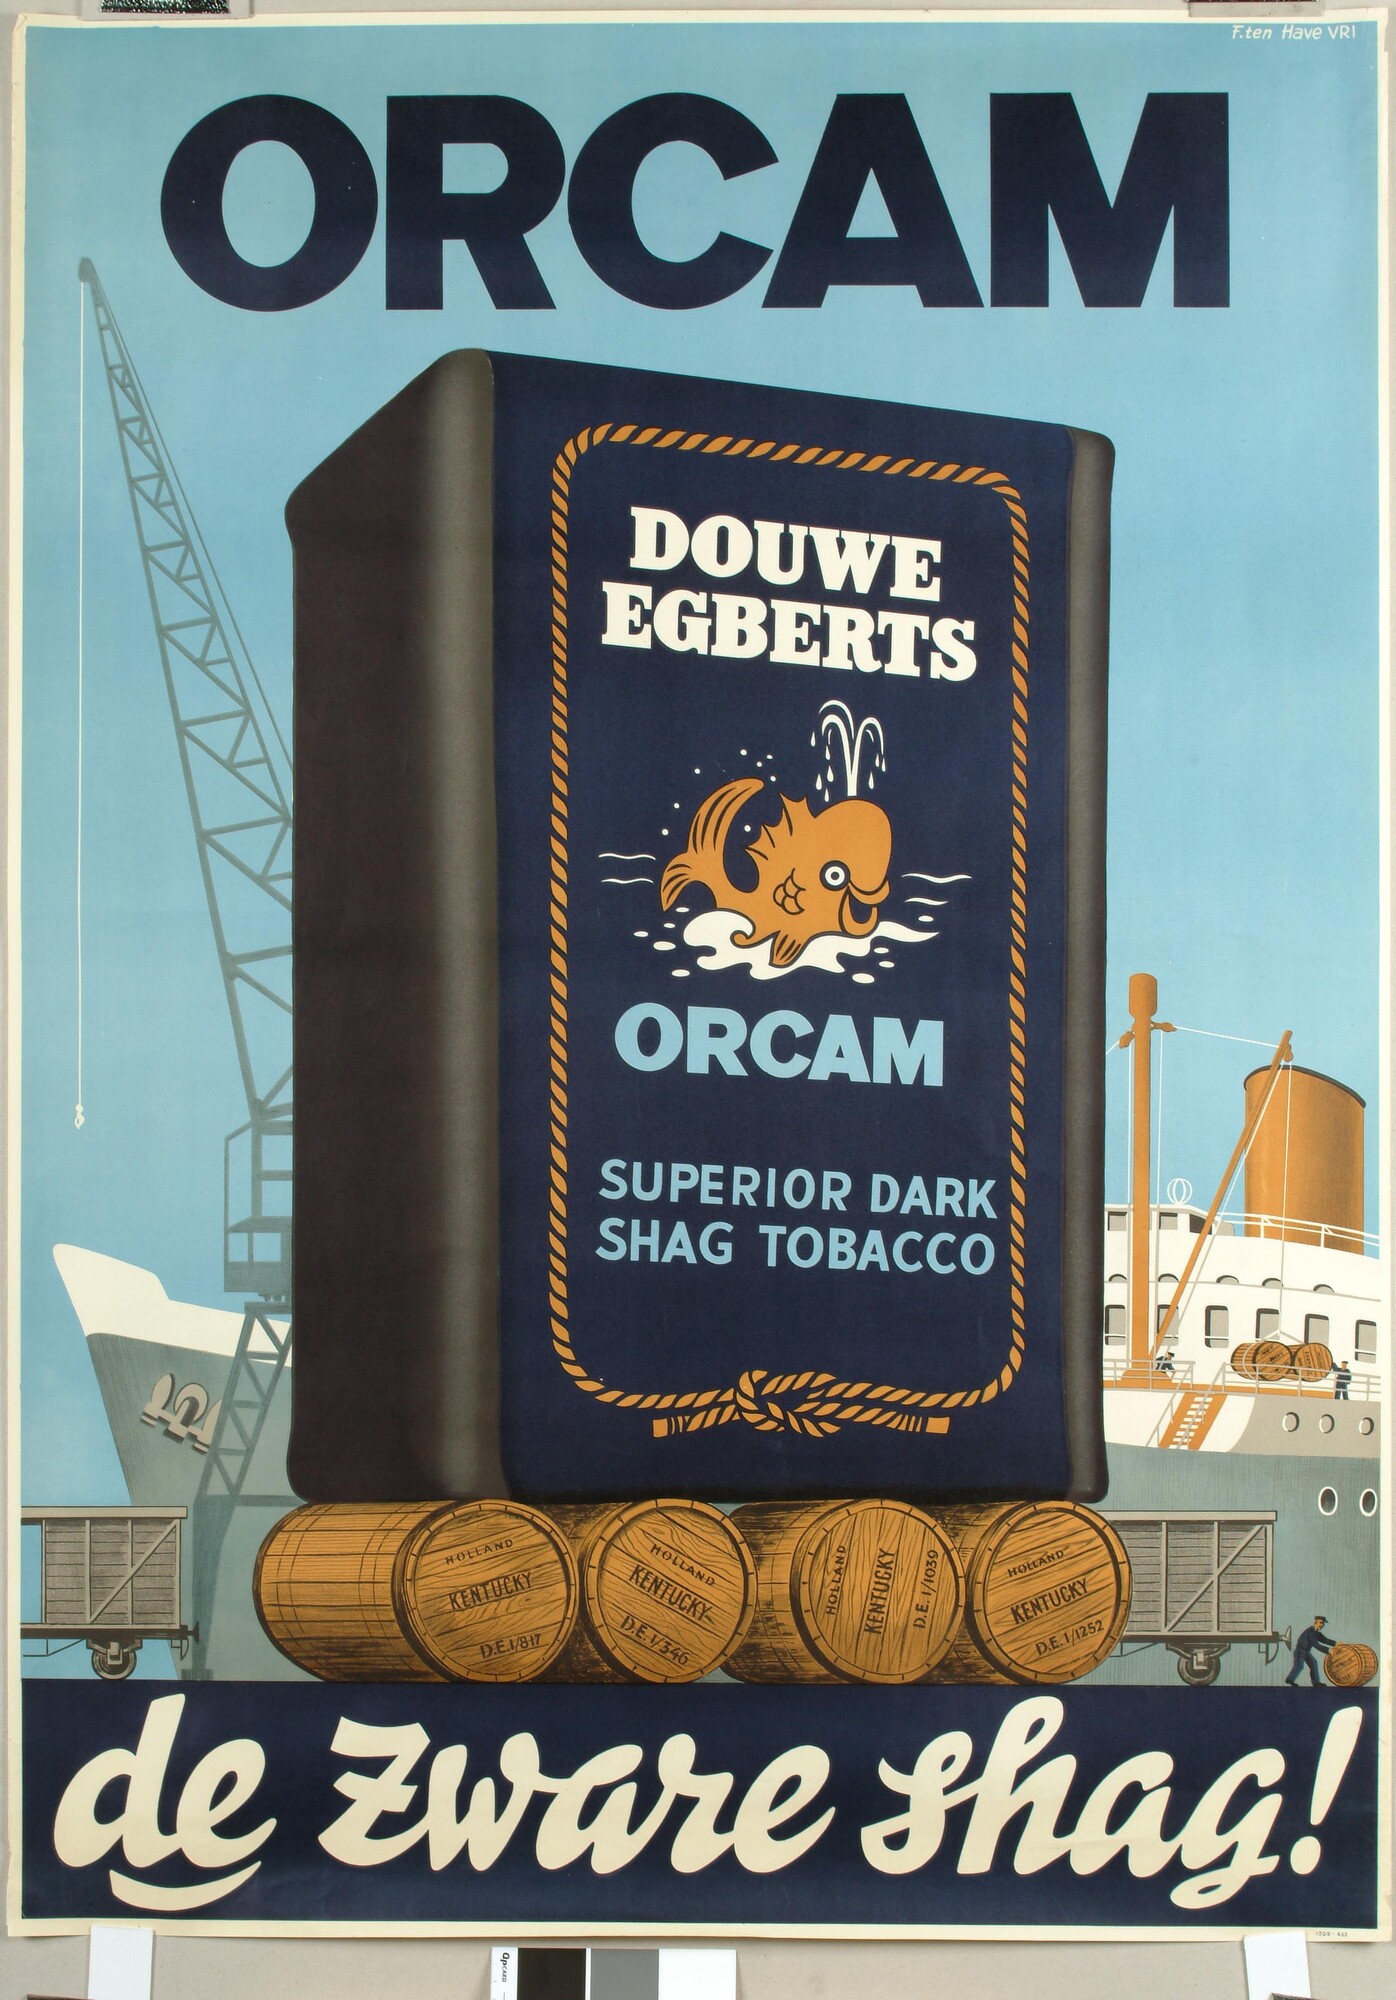 2004.5632; Reclameaffiche voor Douwe Egberts' Orcam zware shag; affiche